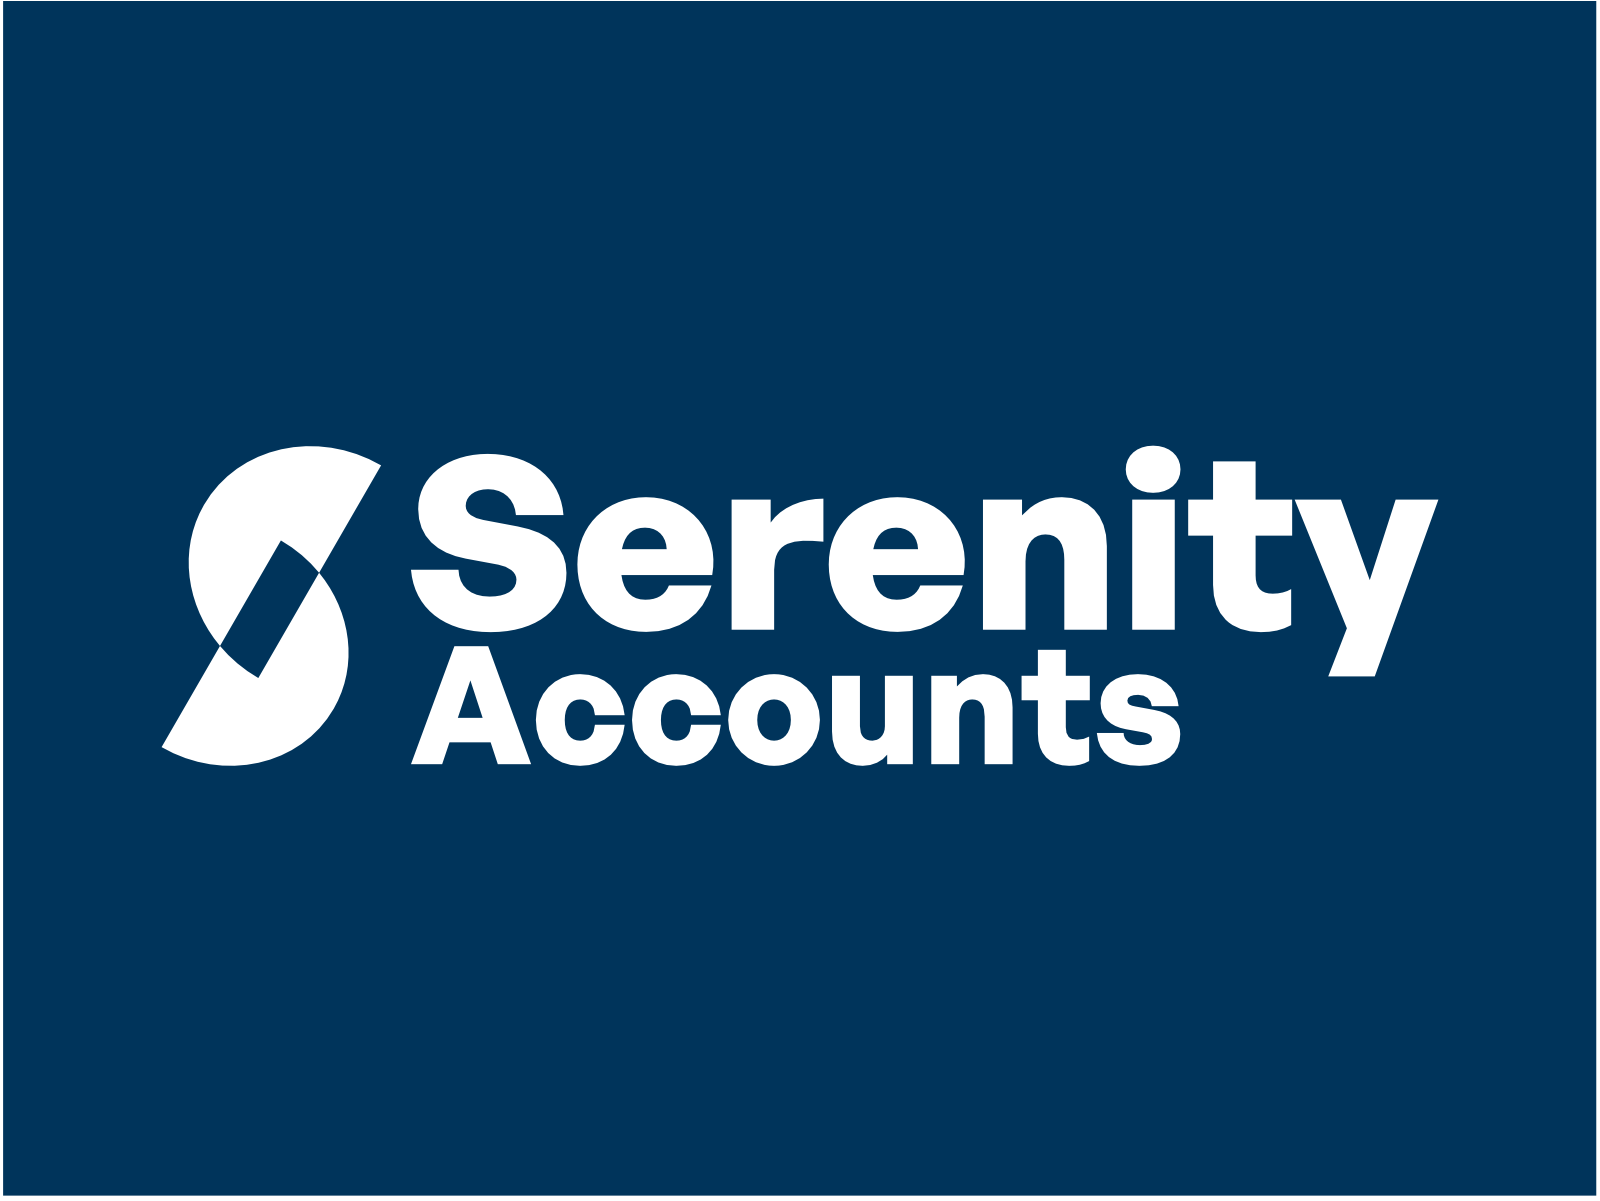 Work image #3 for Serenity Accounts branding